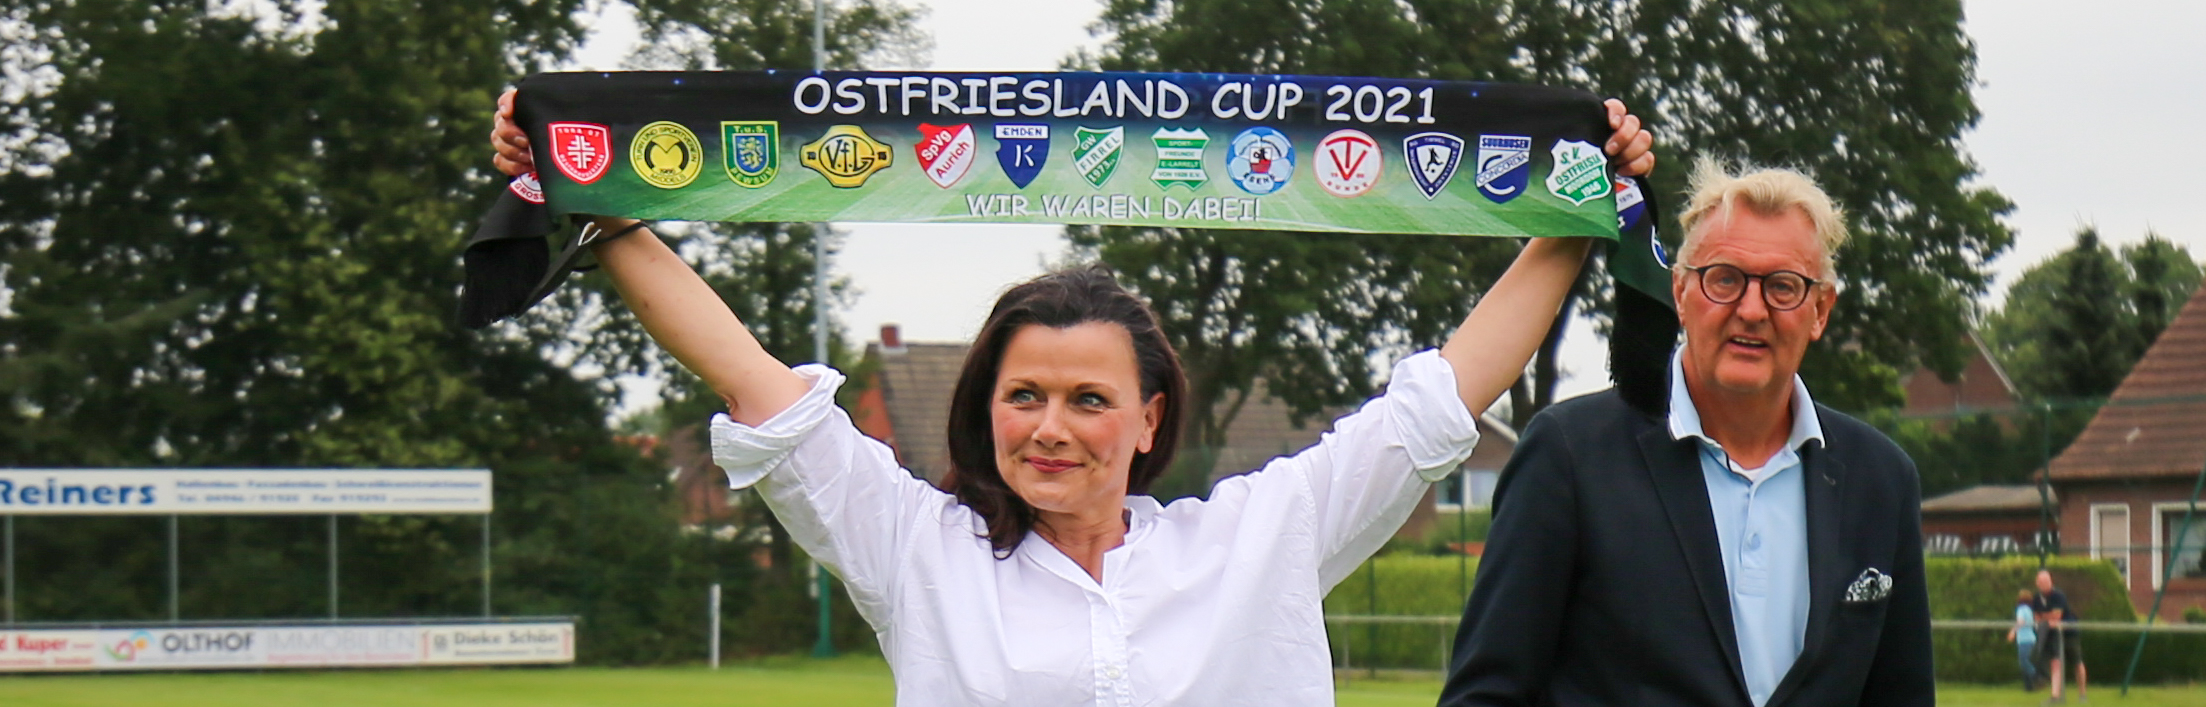 Ostfriesland-Cup 2021